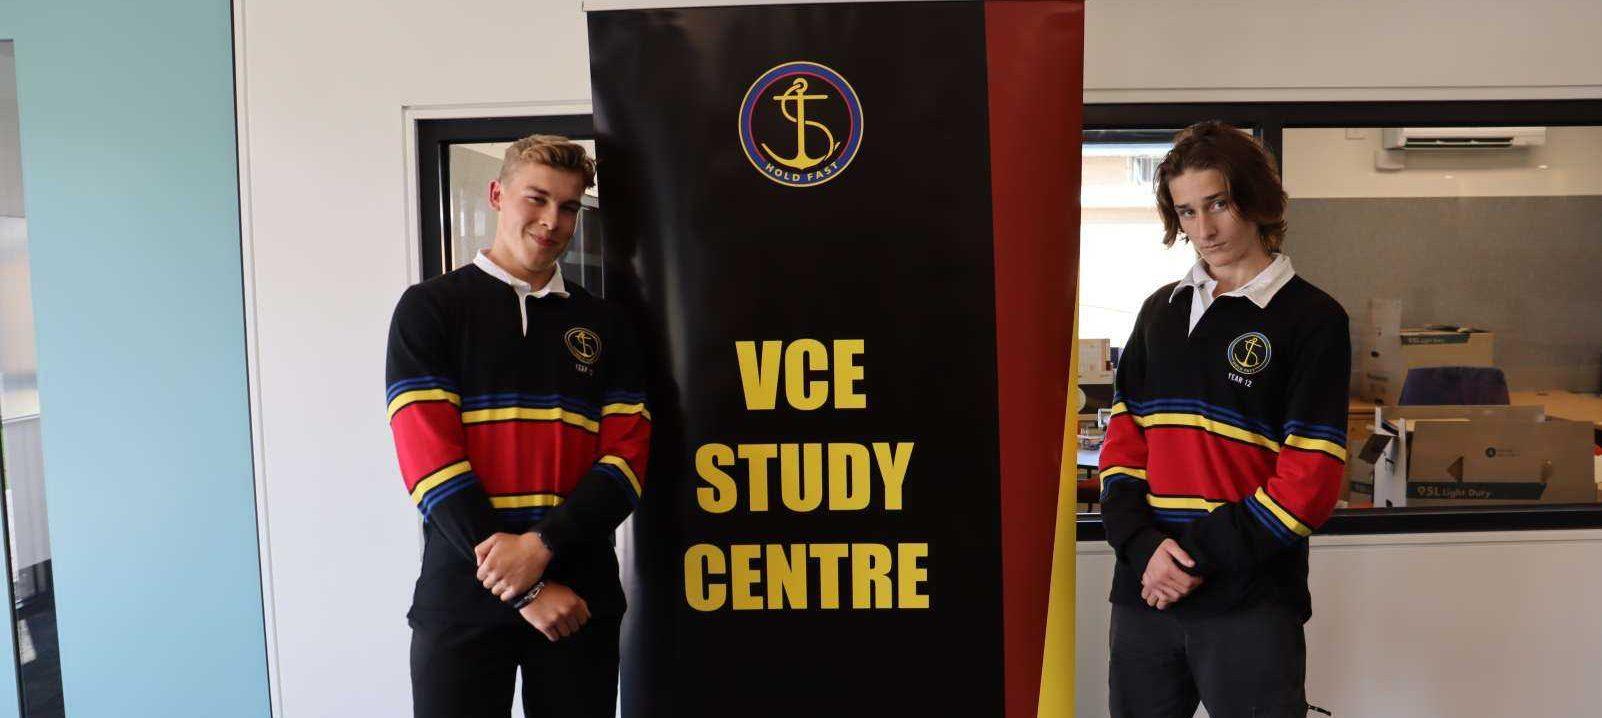 VCE Study Centre